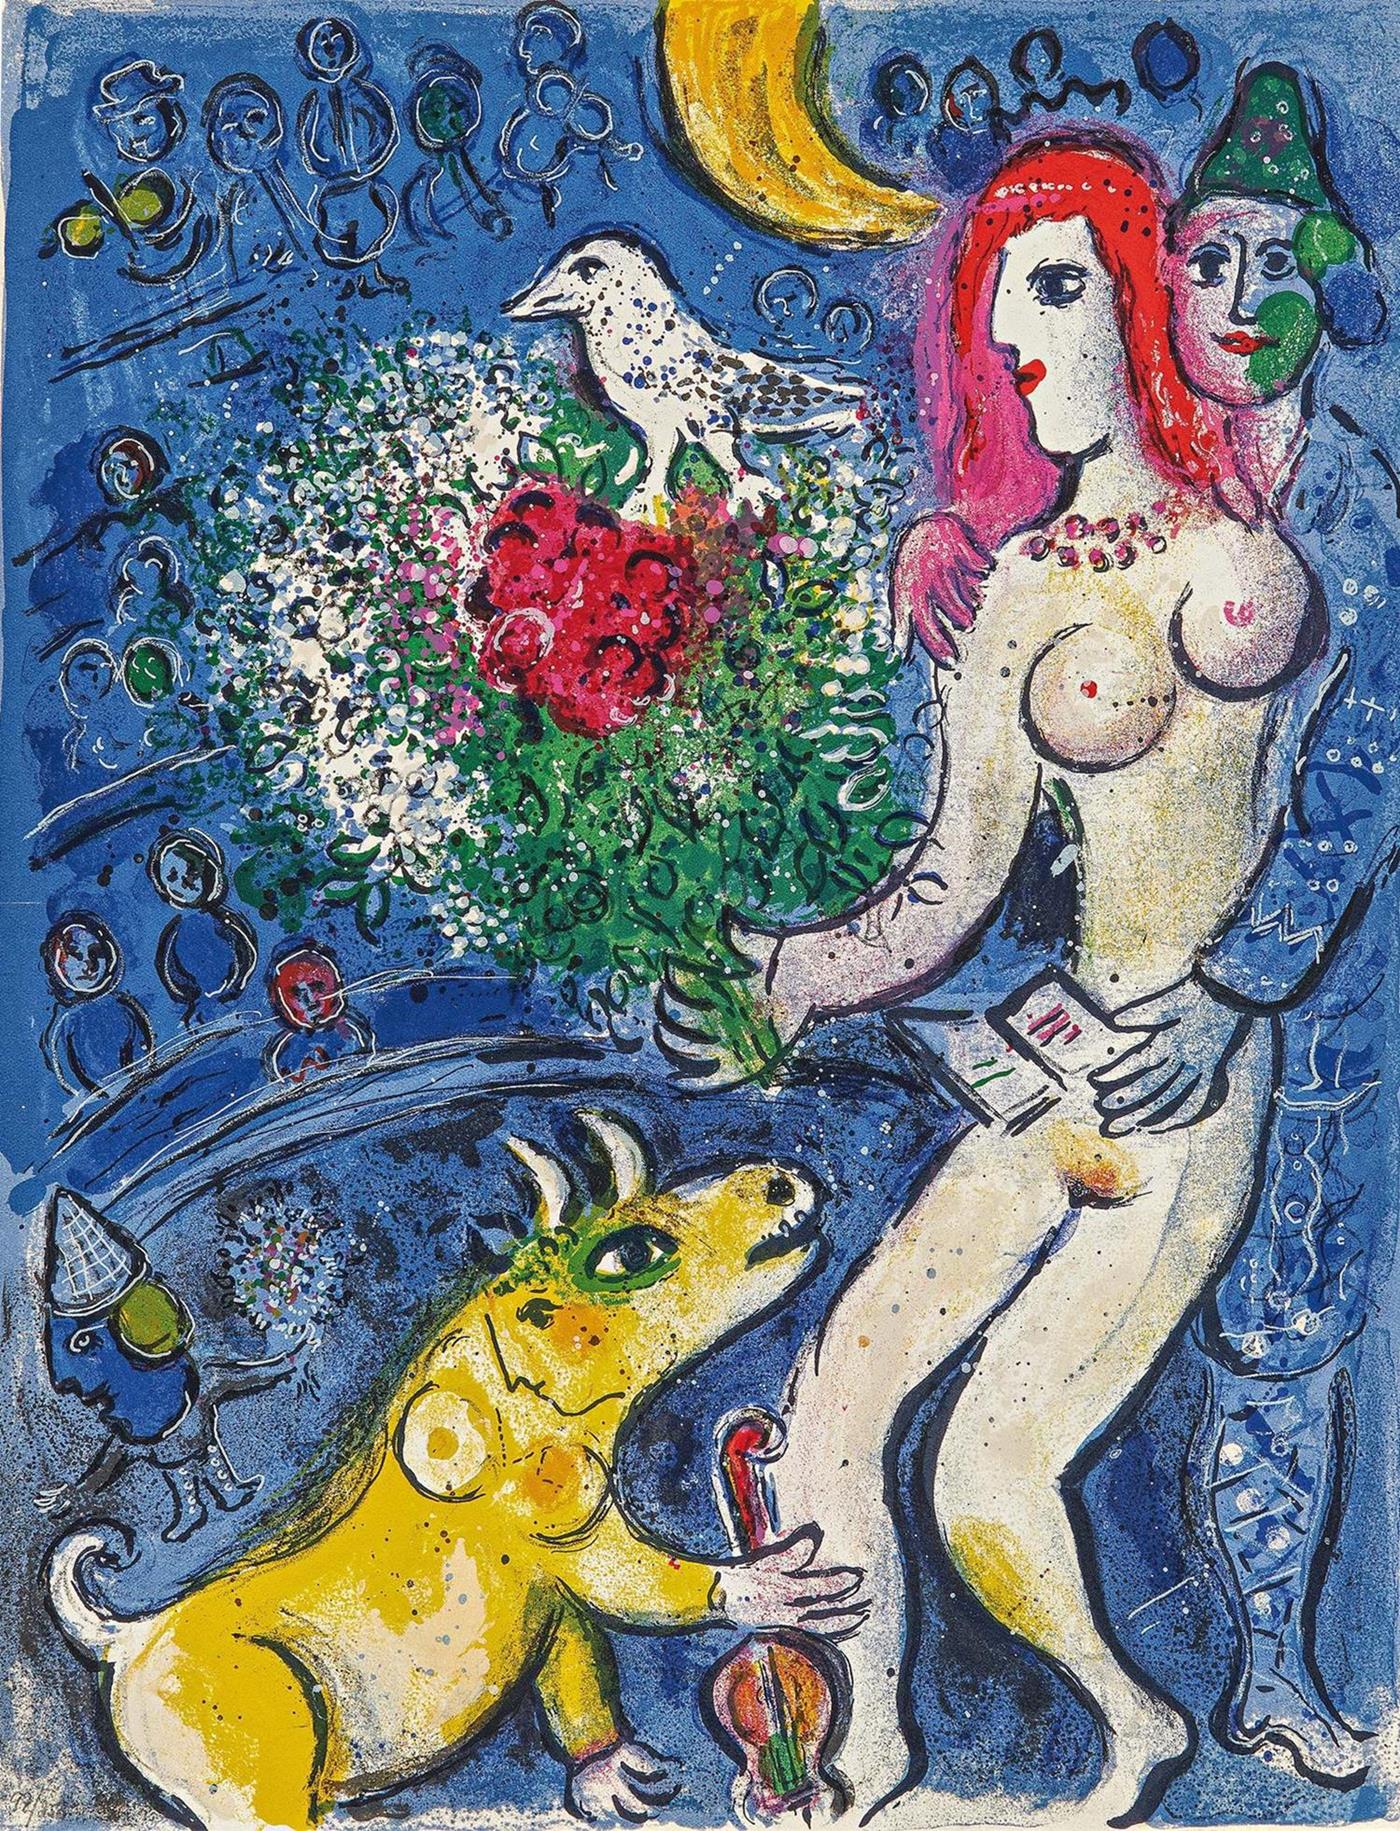 Chagall, Marc.